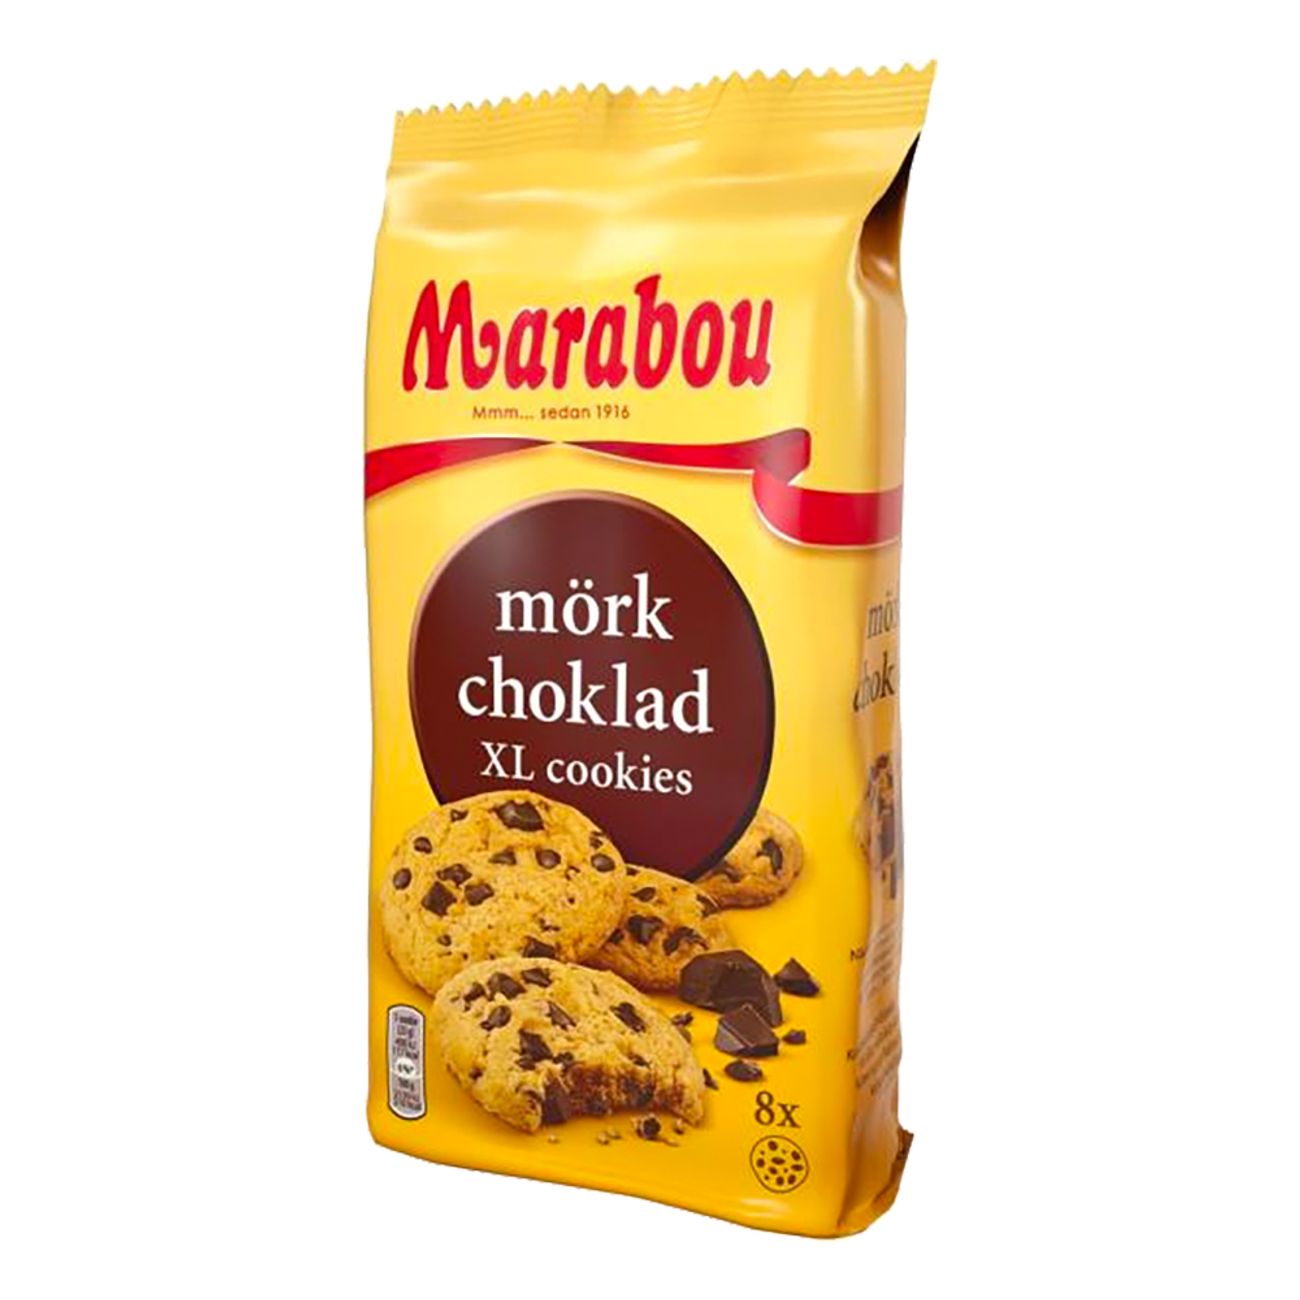 marabou-xl-cookies-mork-choklad-82895-1